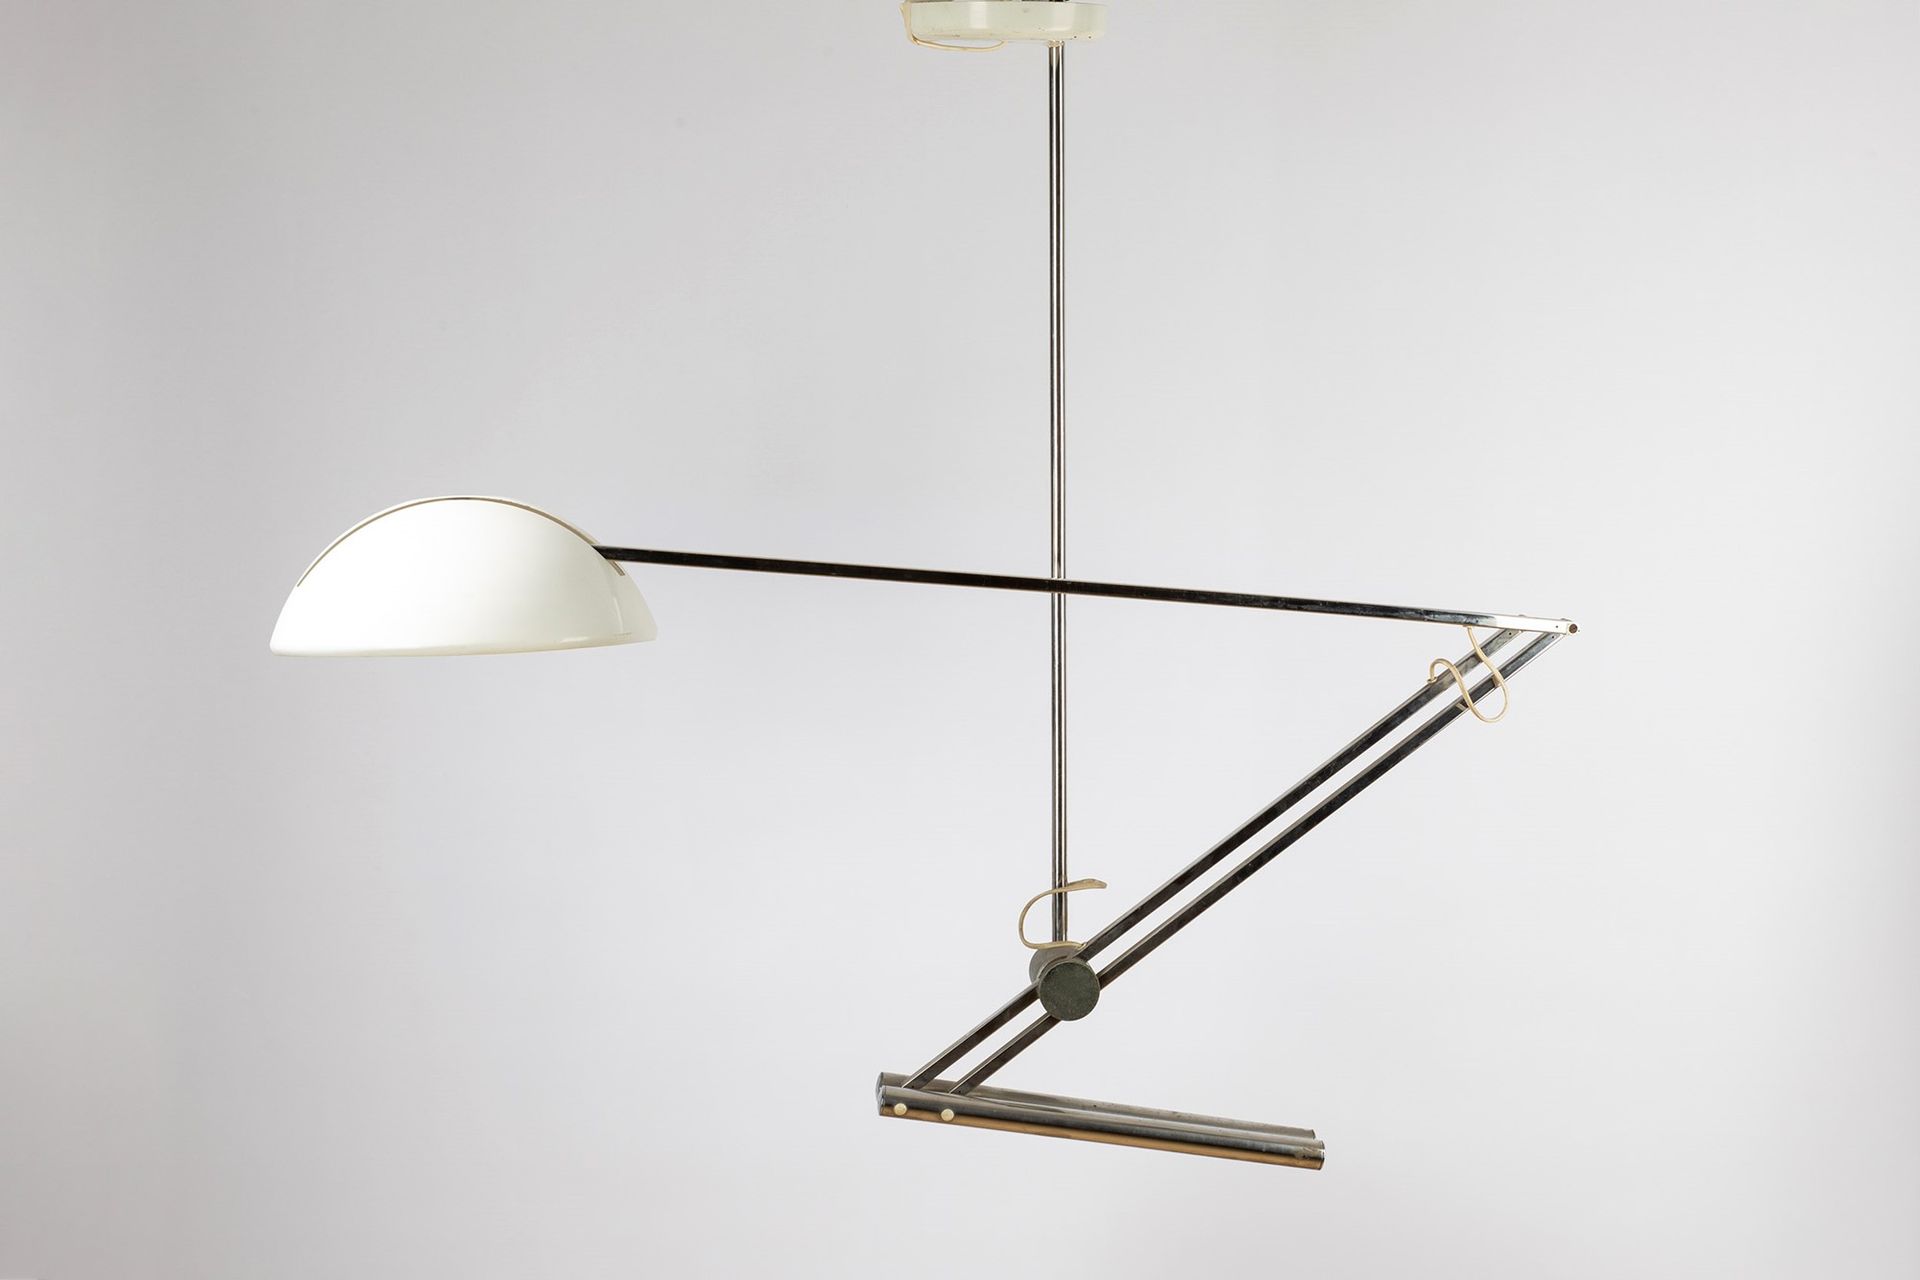 ITALIAN MANUFACTURE Lampe suspendue, période 60's

h cm 116 x 122 x 34
avec bras&hellip;